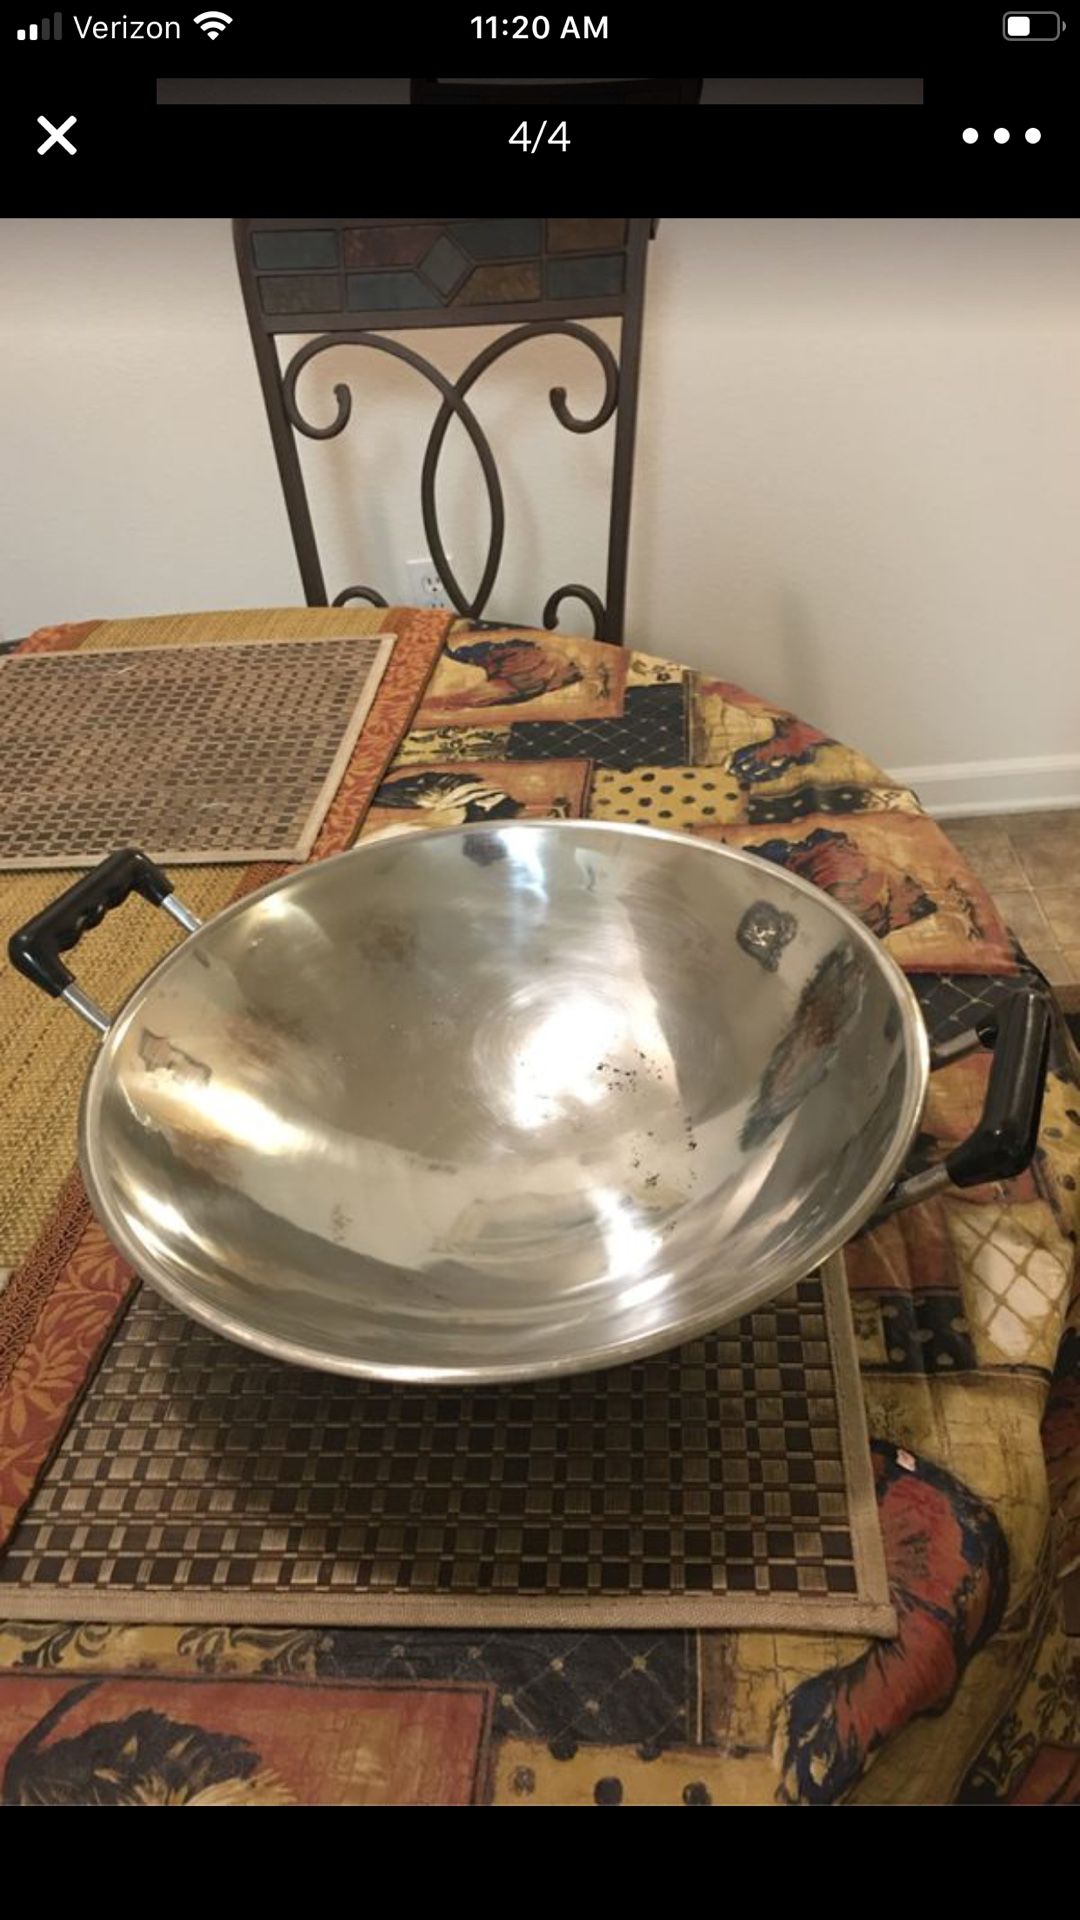 14 “ stainless steel wok